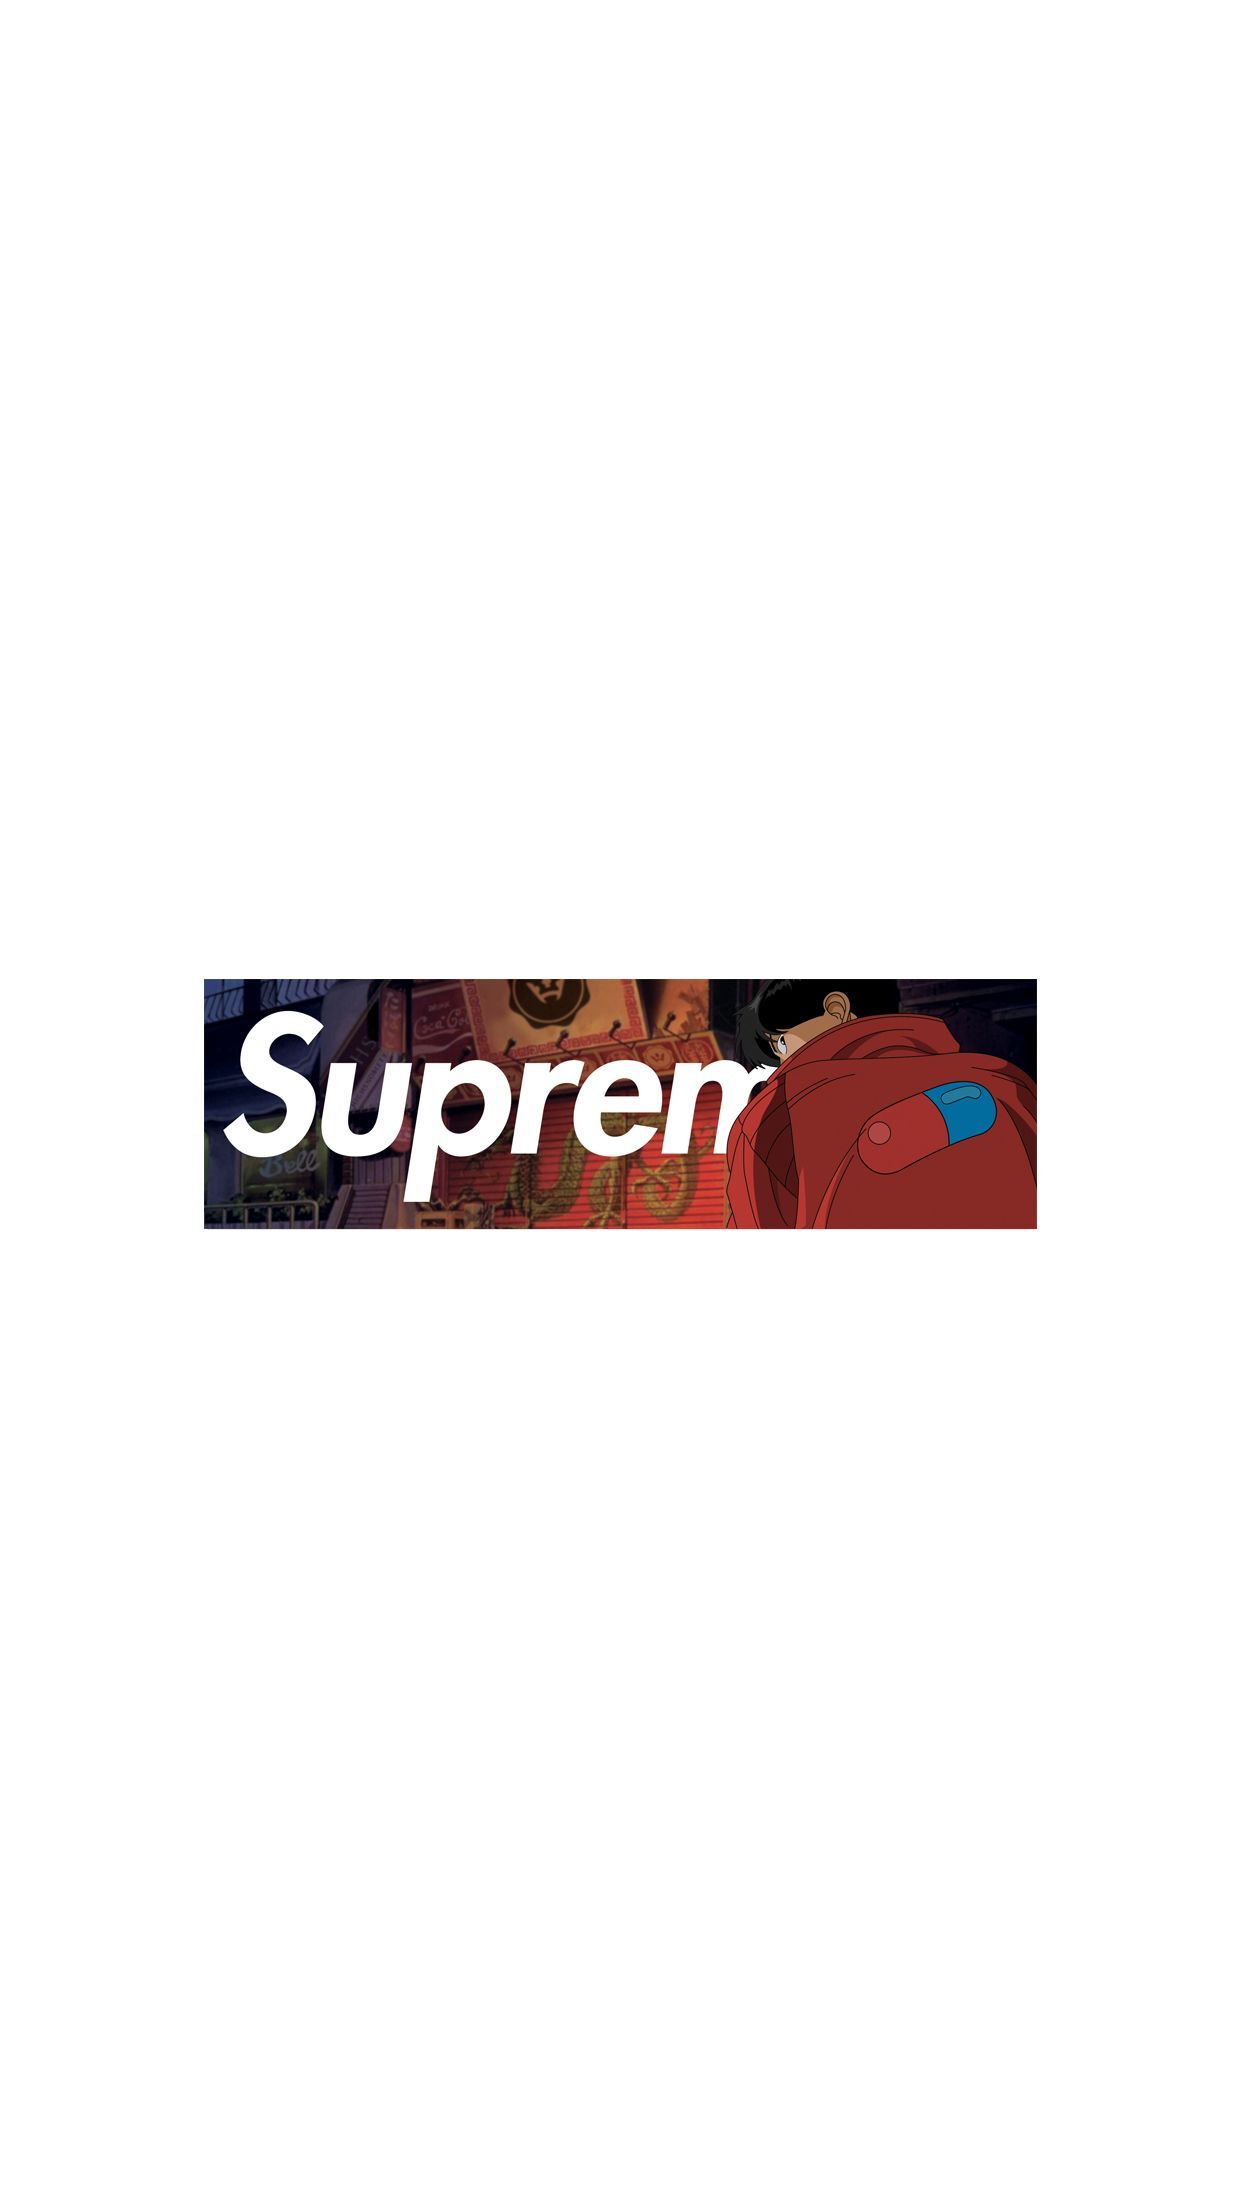 Supreme Brand Wallpaper Free Supreme Brand Background